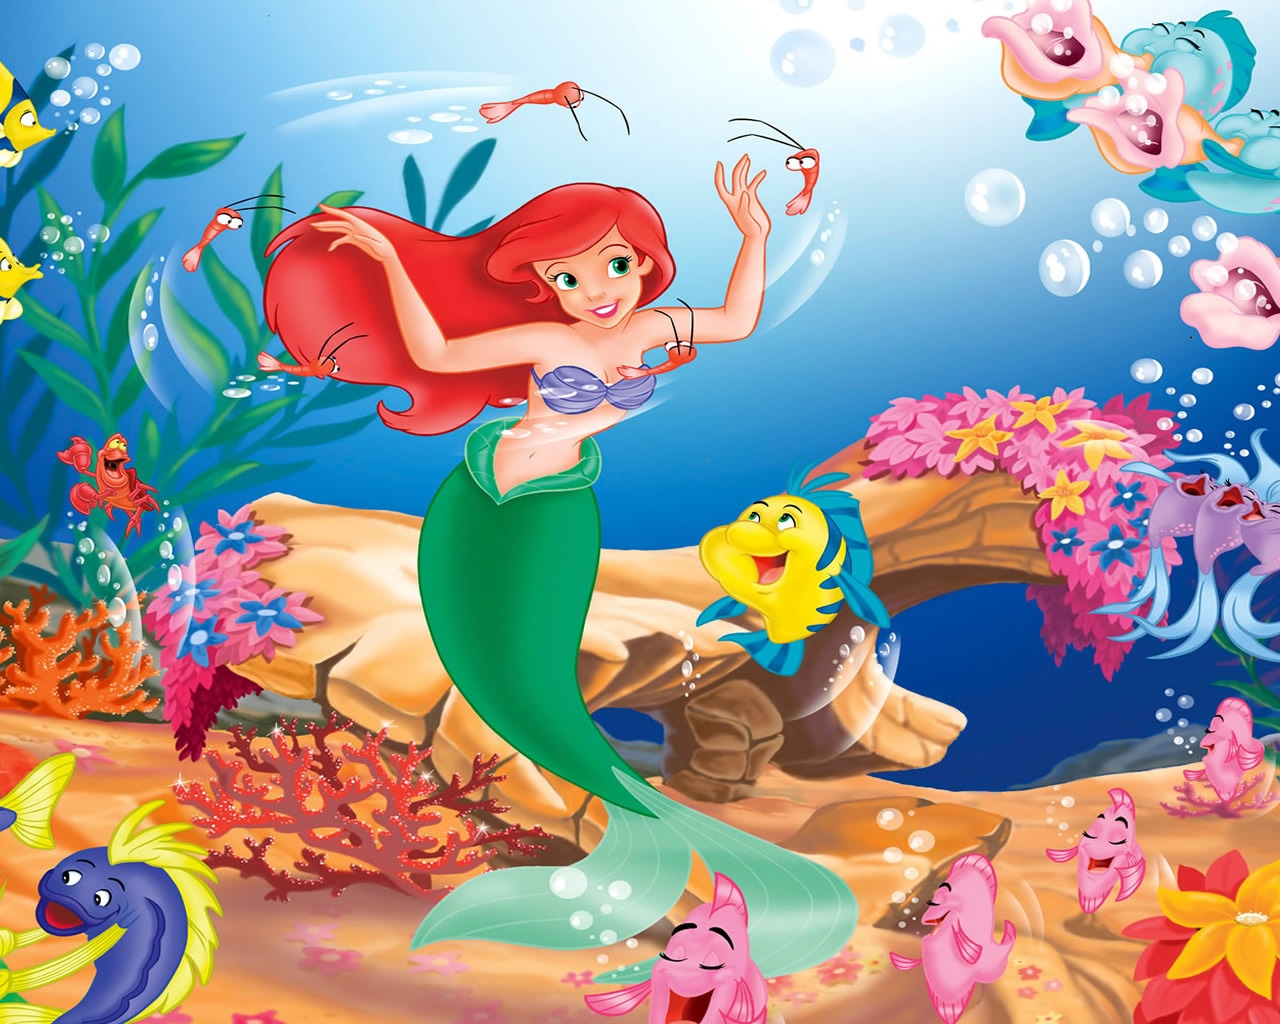 Little Mermaid for 1280 x 1024 resolution